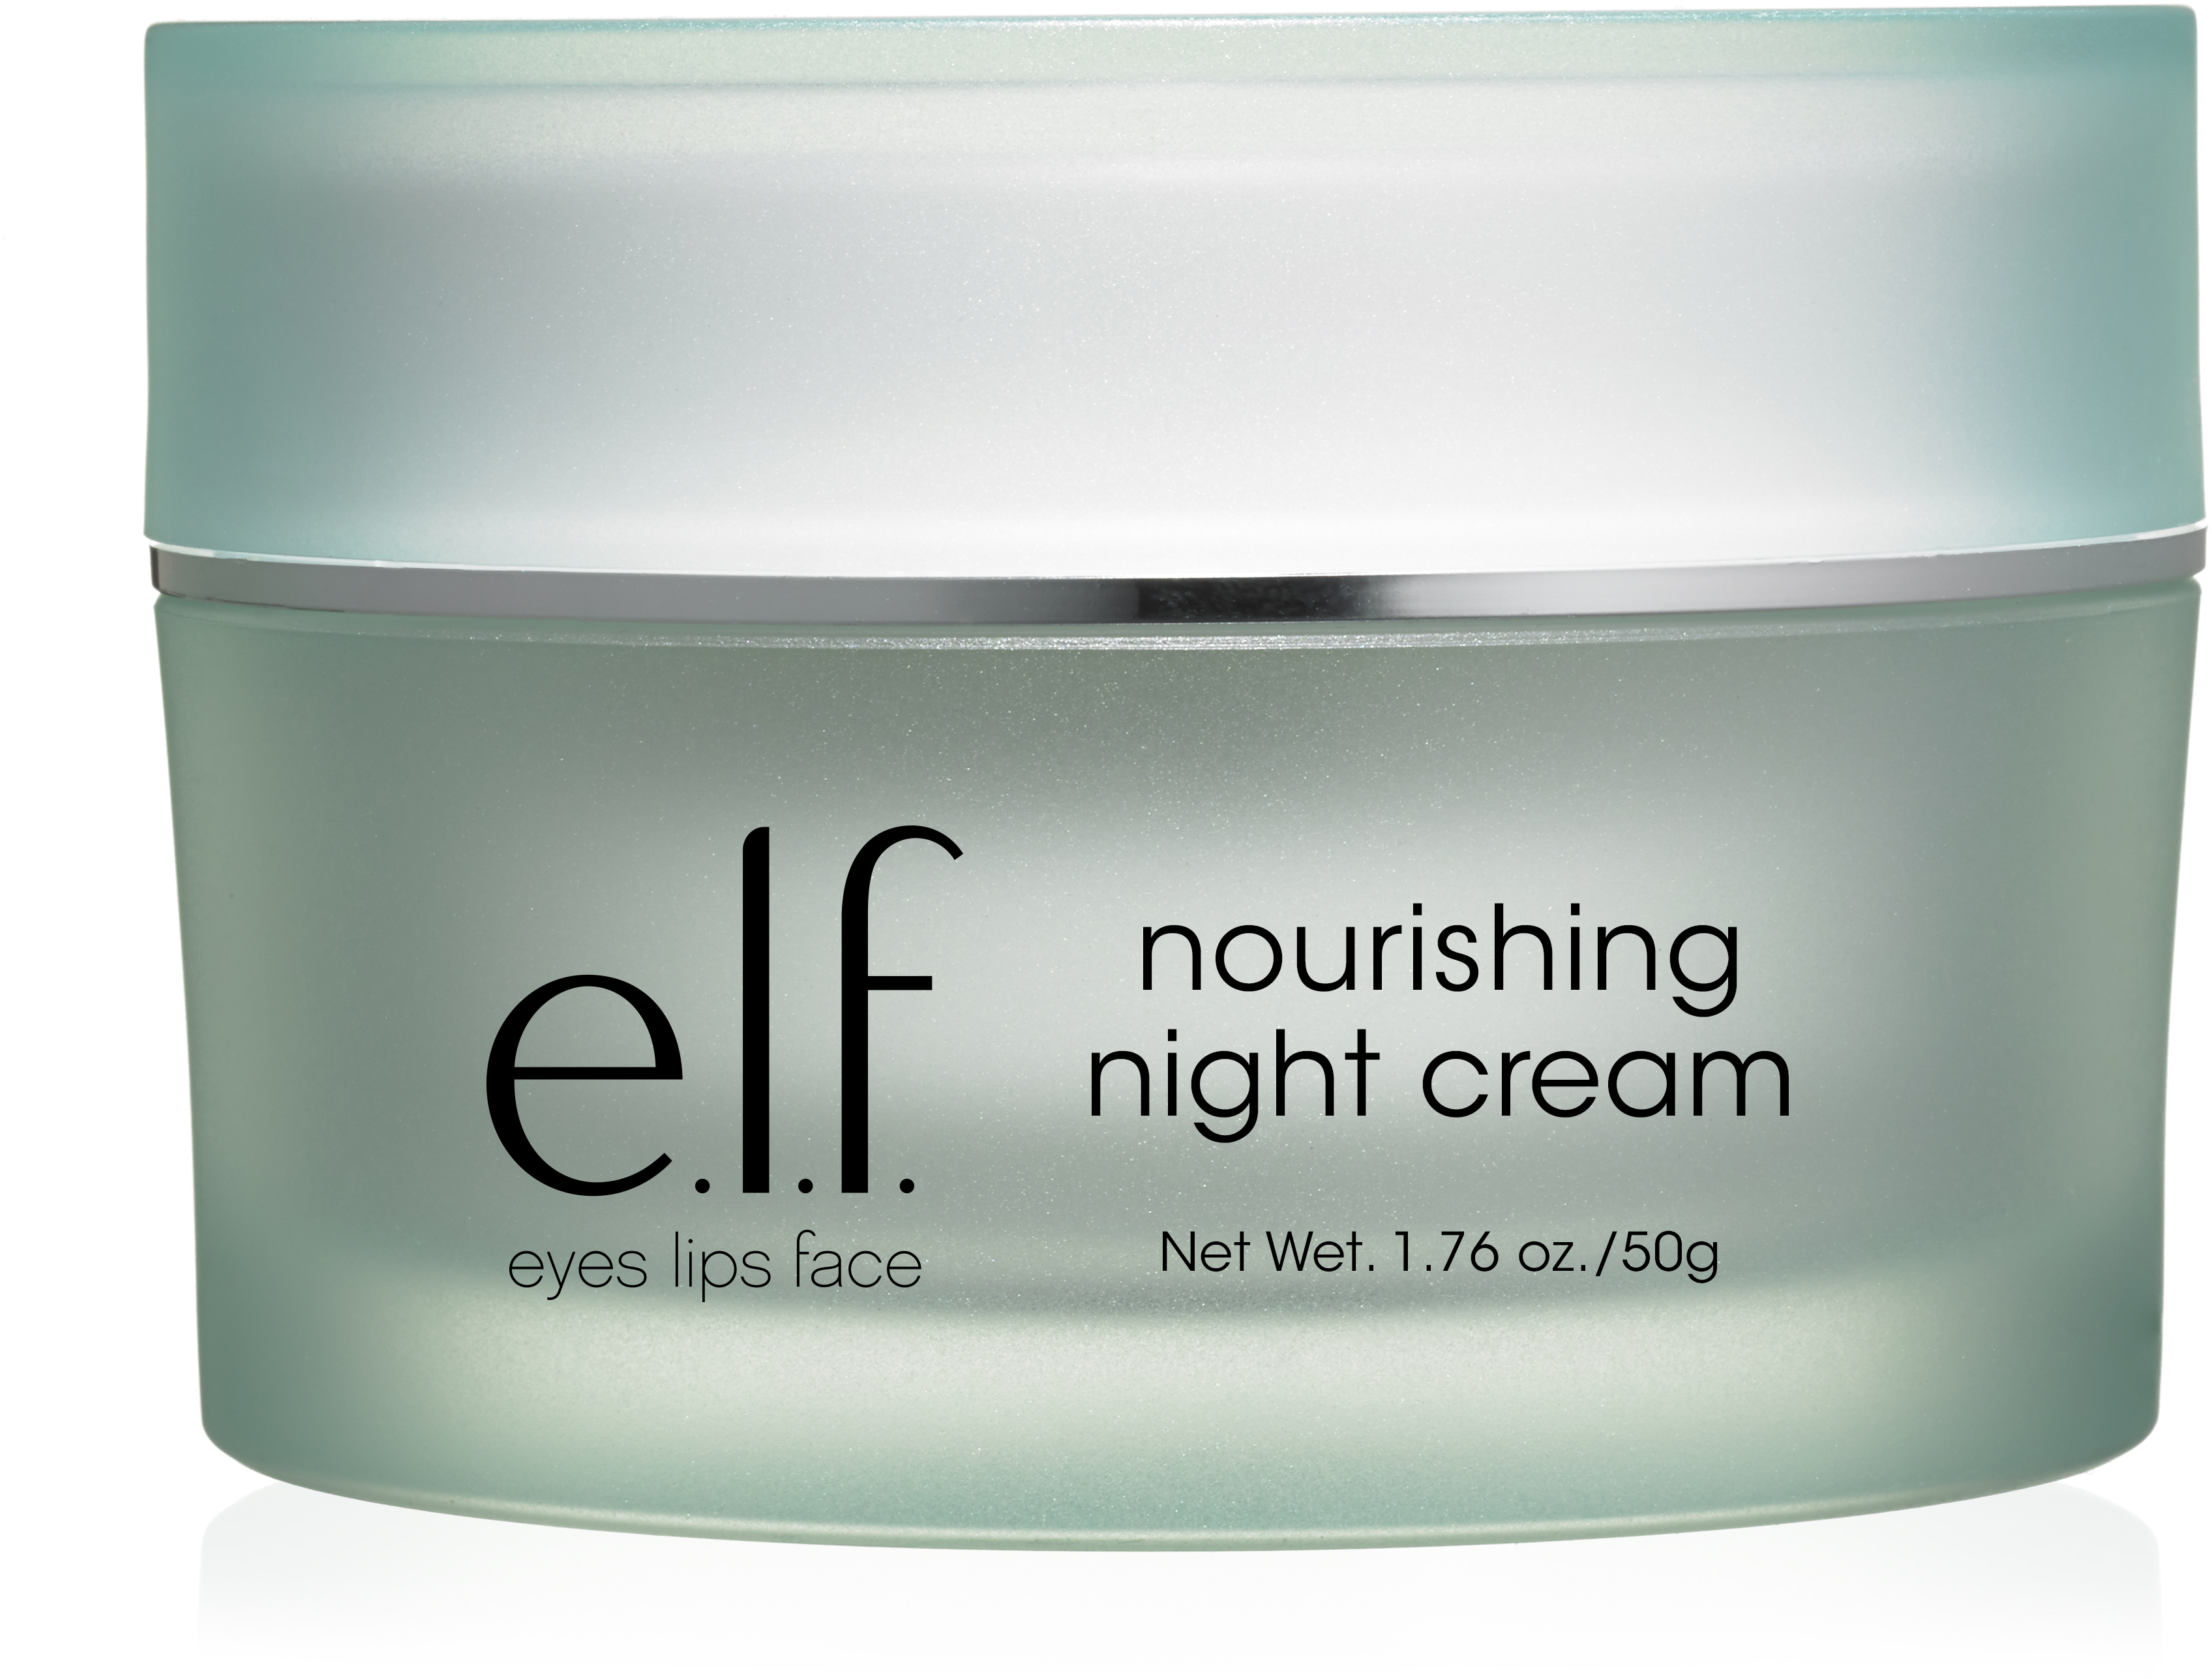 E.l.f. Nourishing Night Cream 50g